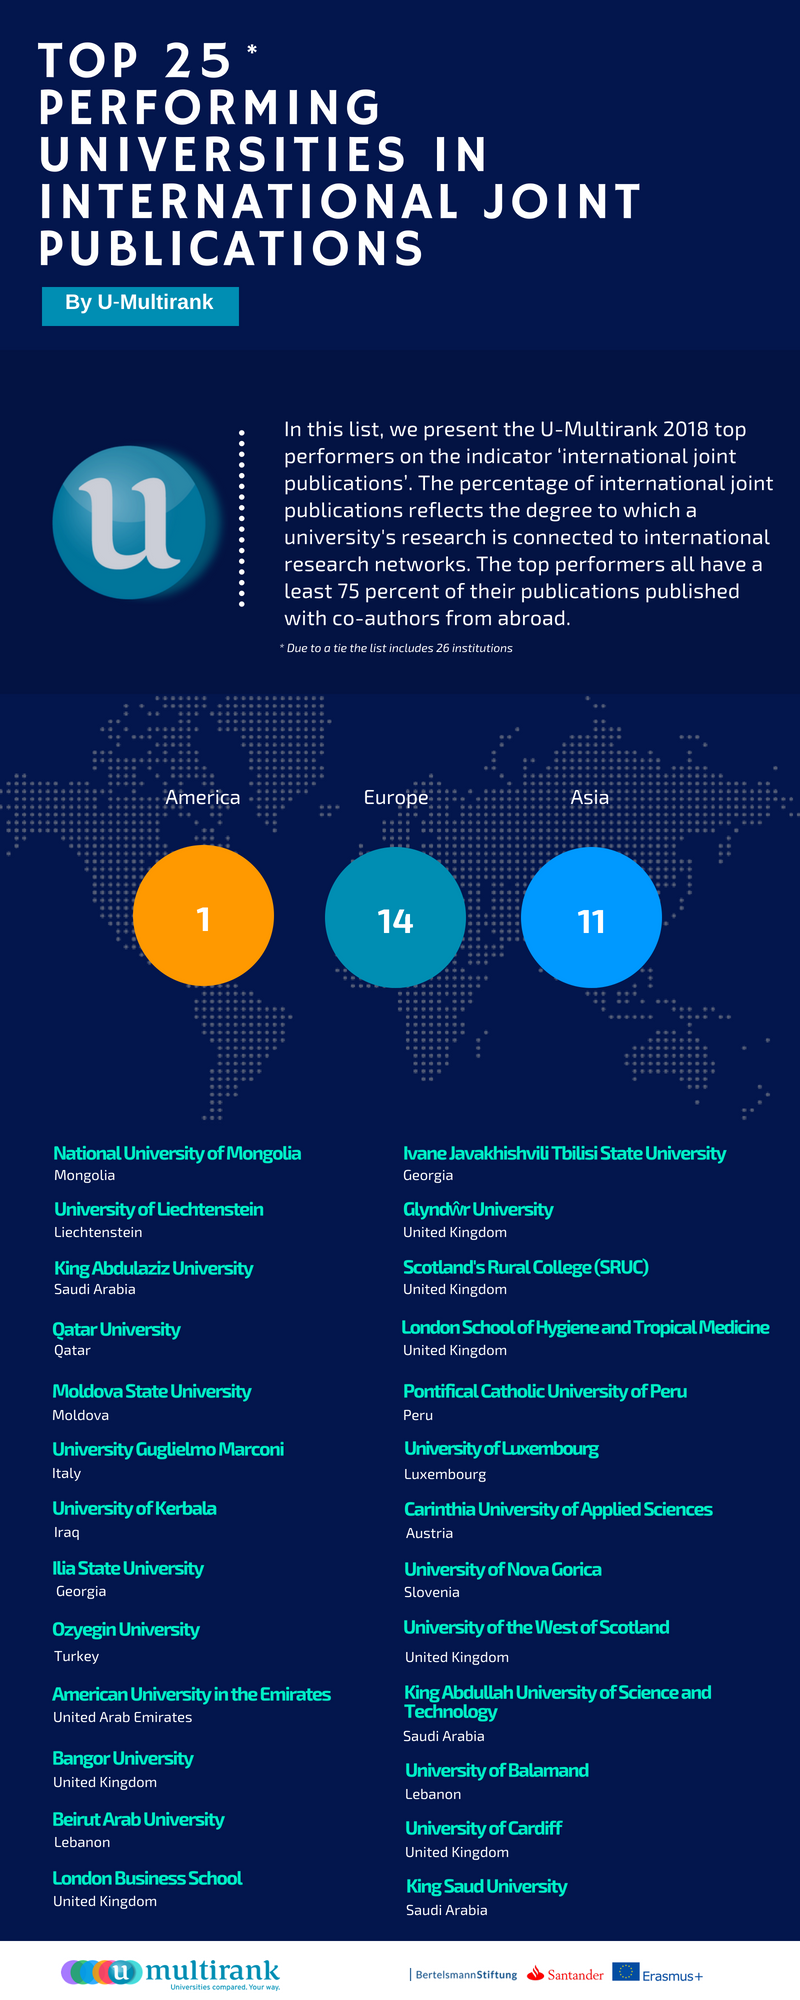 Top 25 Universities in International Joint Publications